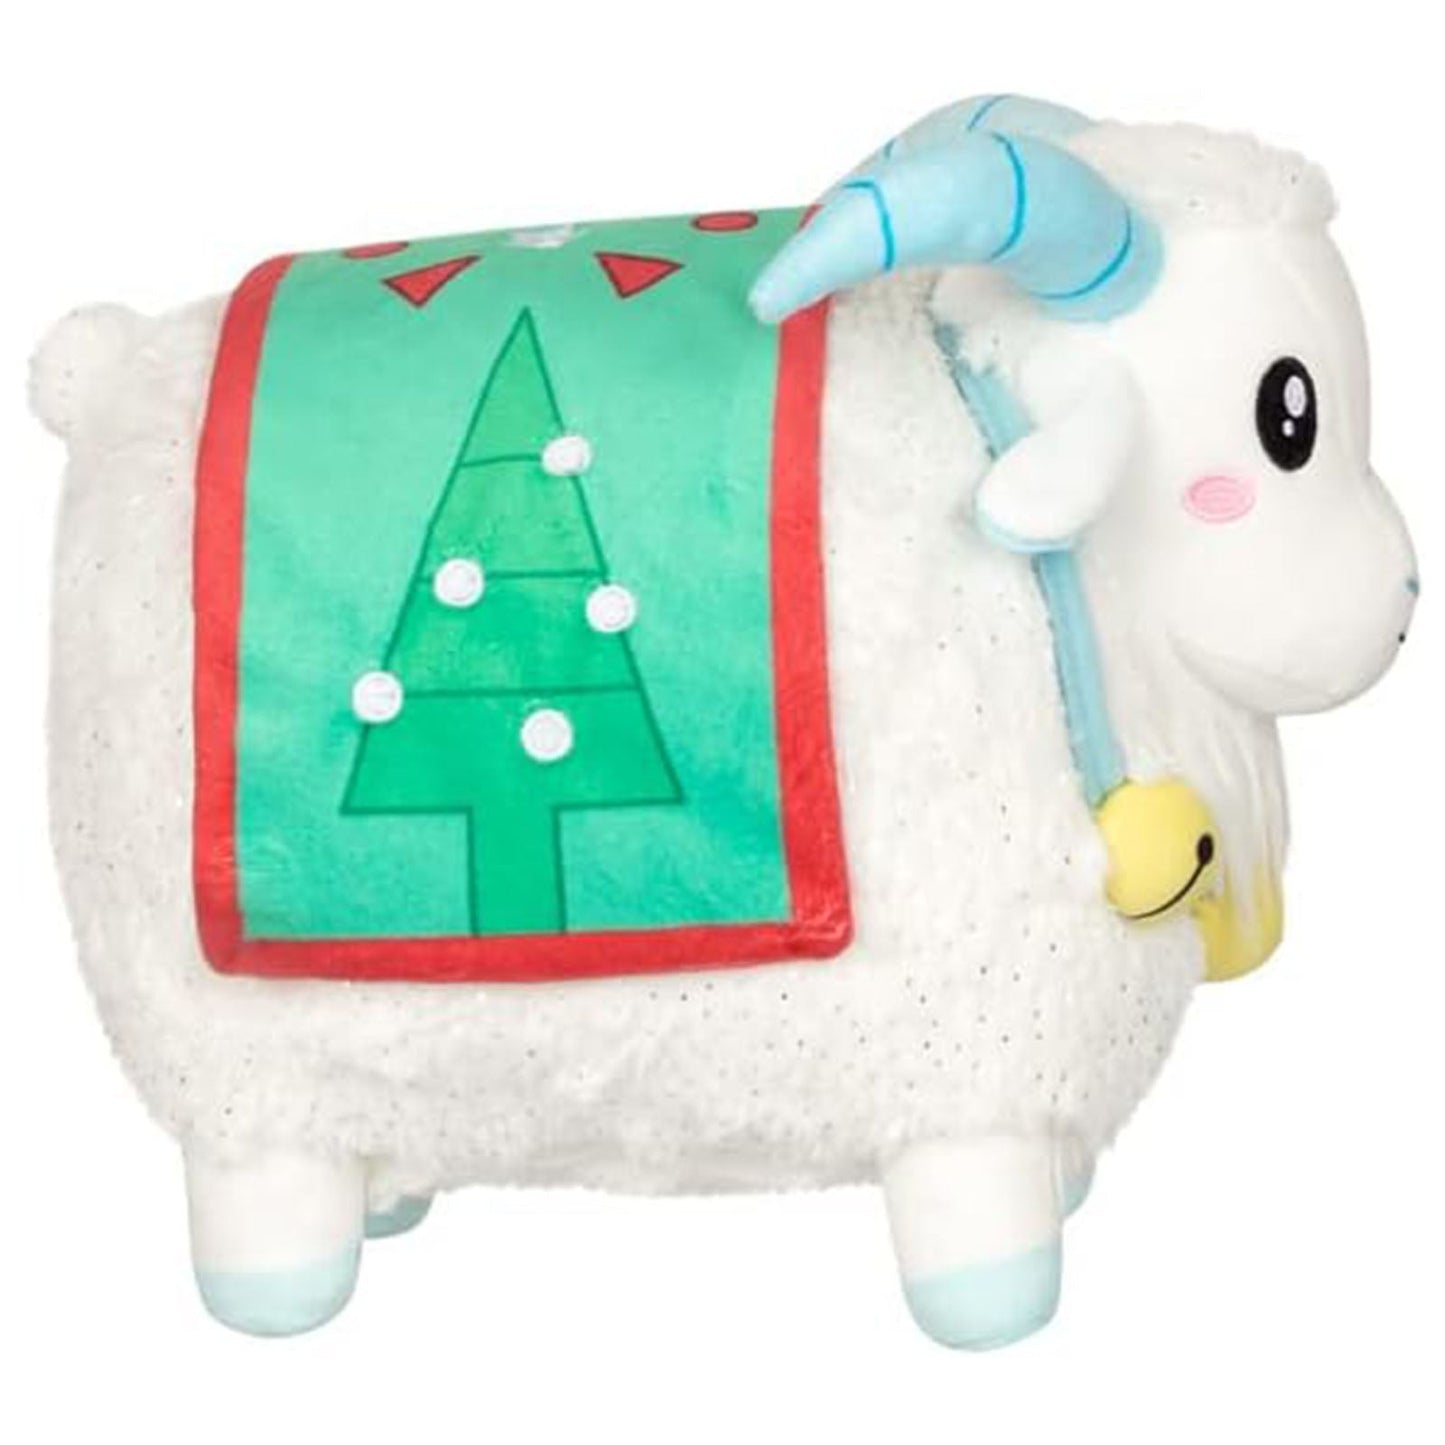 Squishable Mini Snow Goat 7 Inch Plush